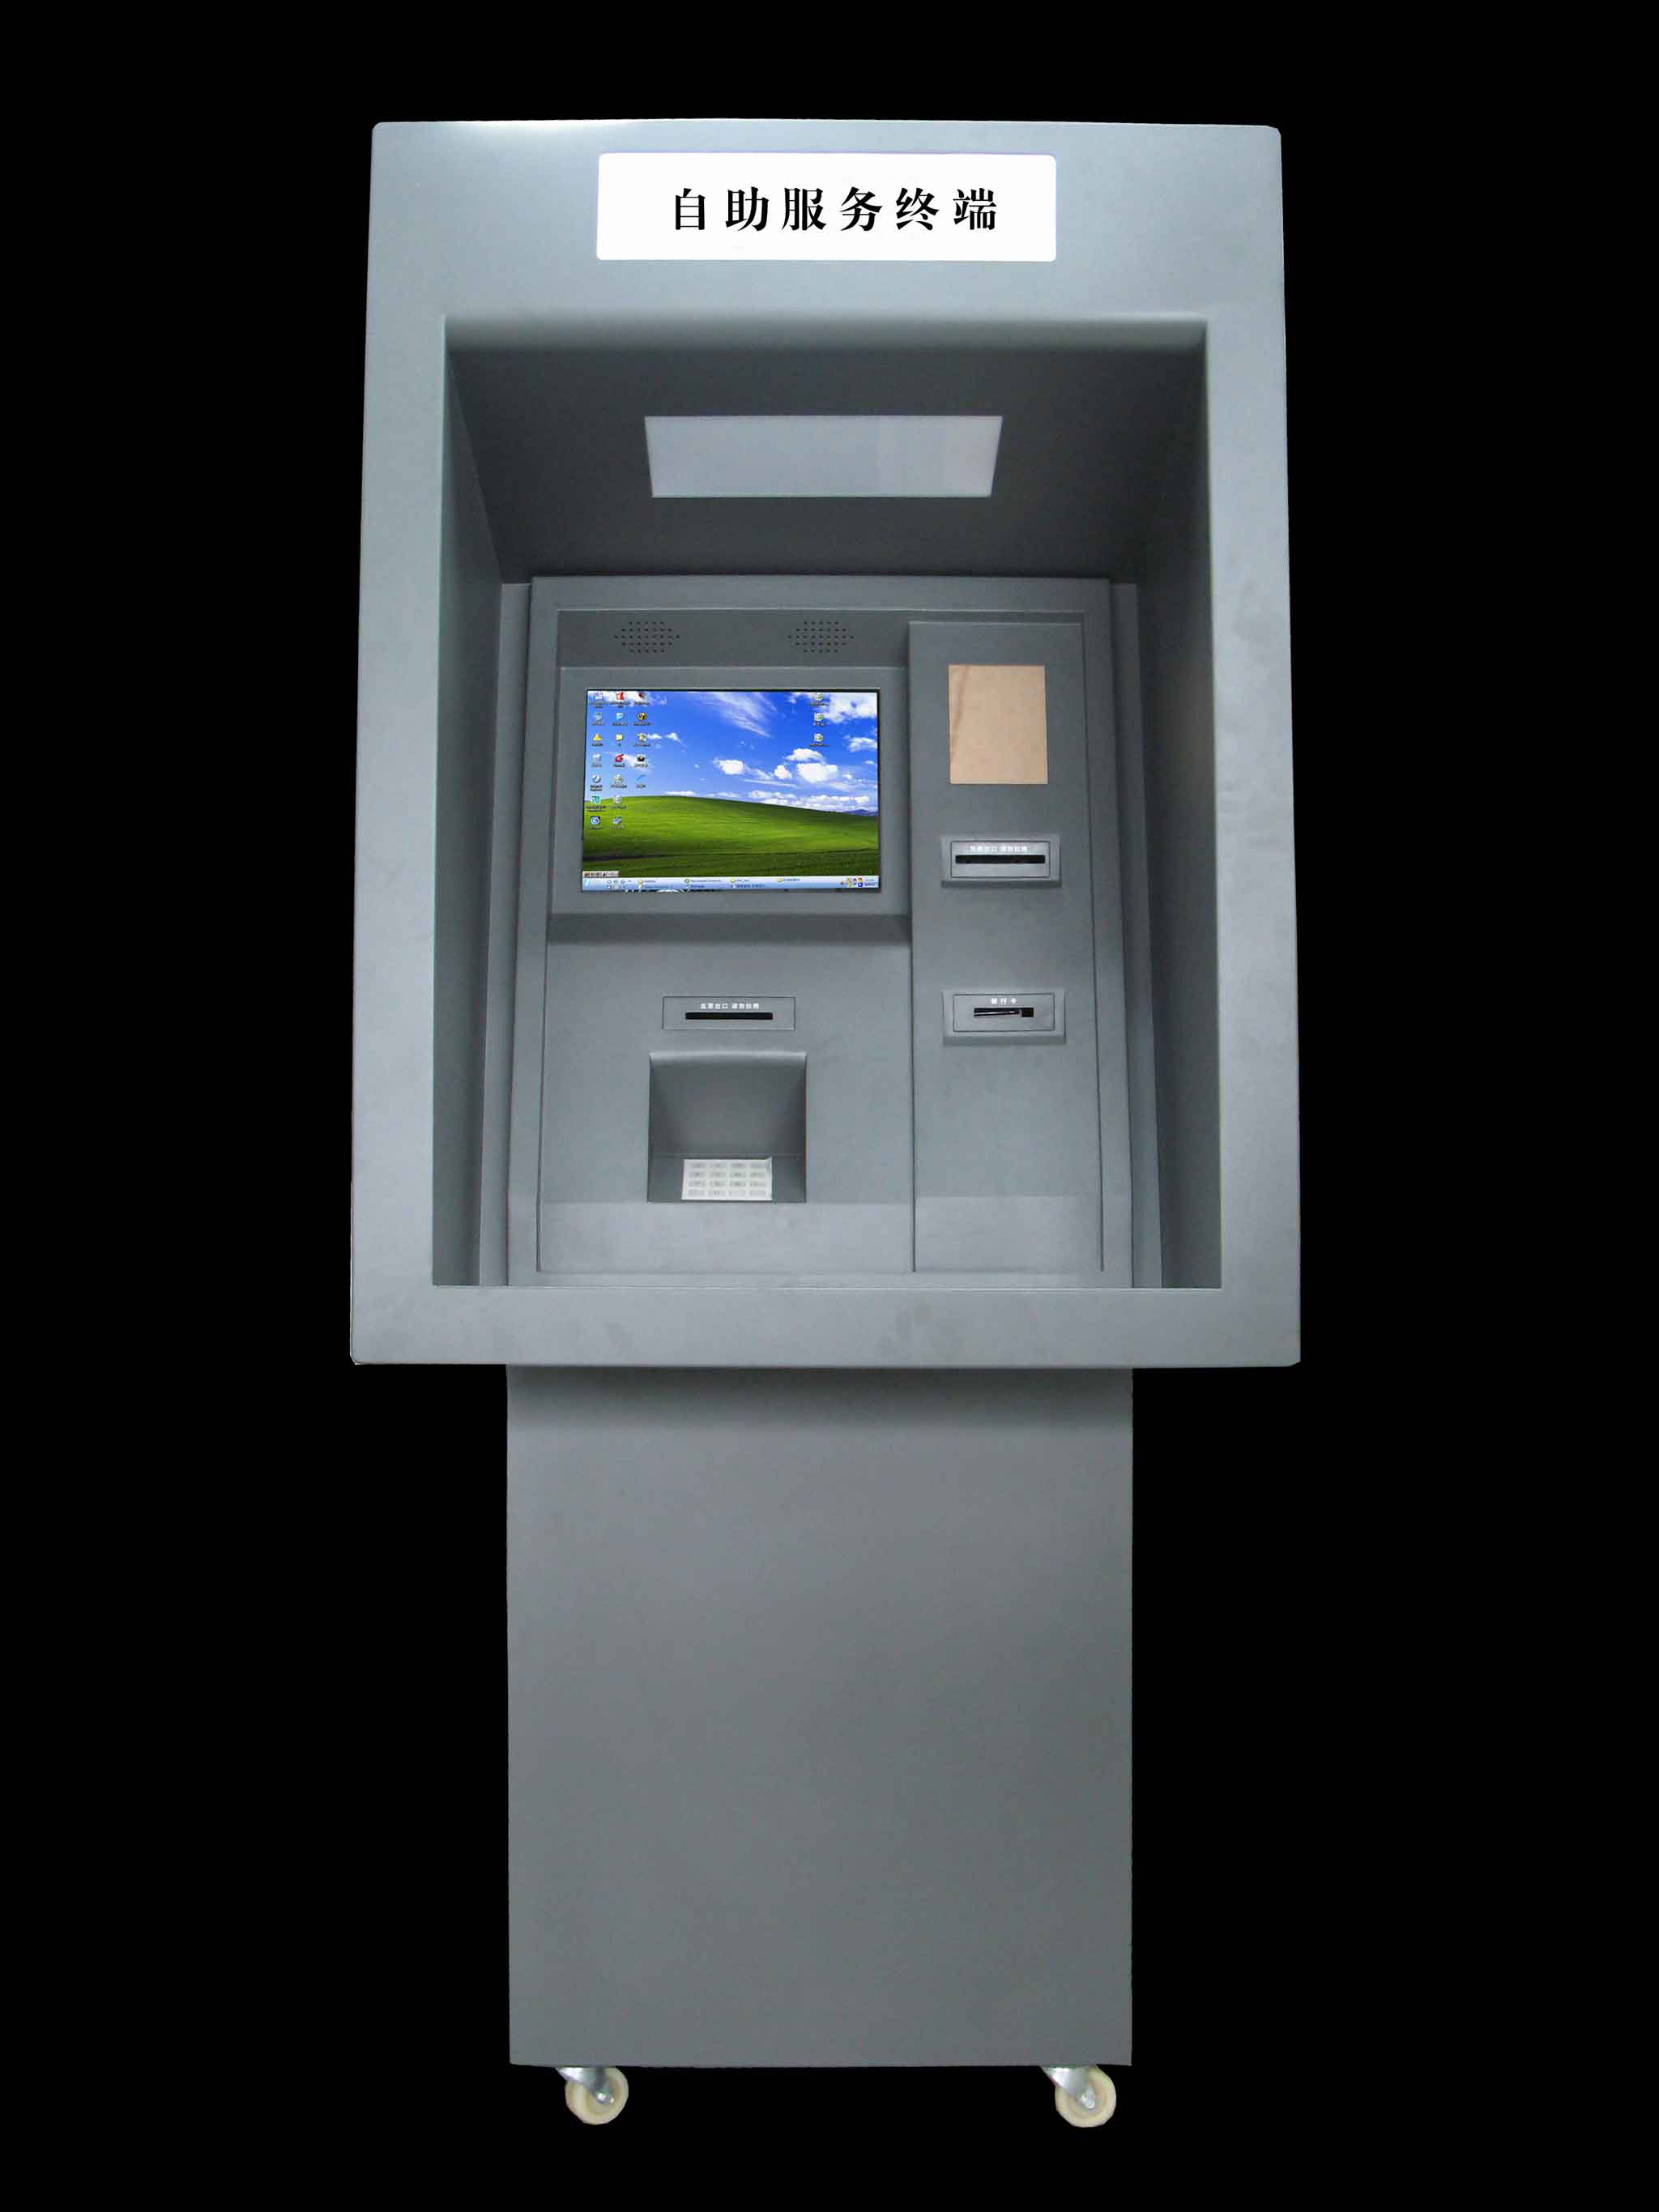 Wall-Mounted ATM Machine Kiosk